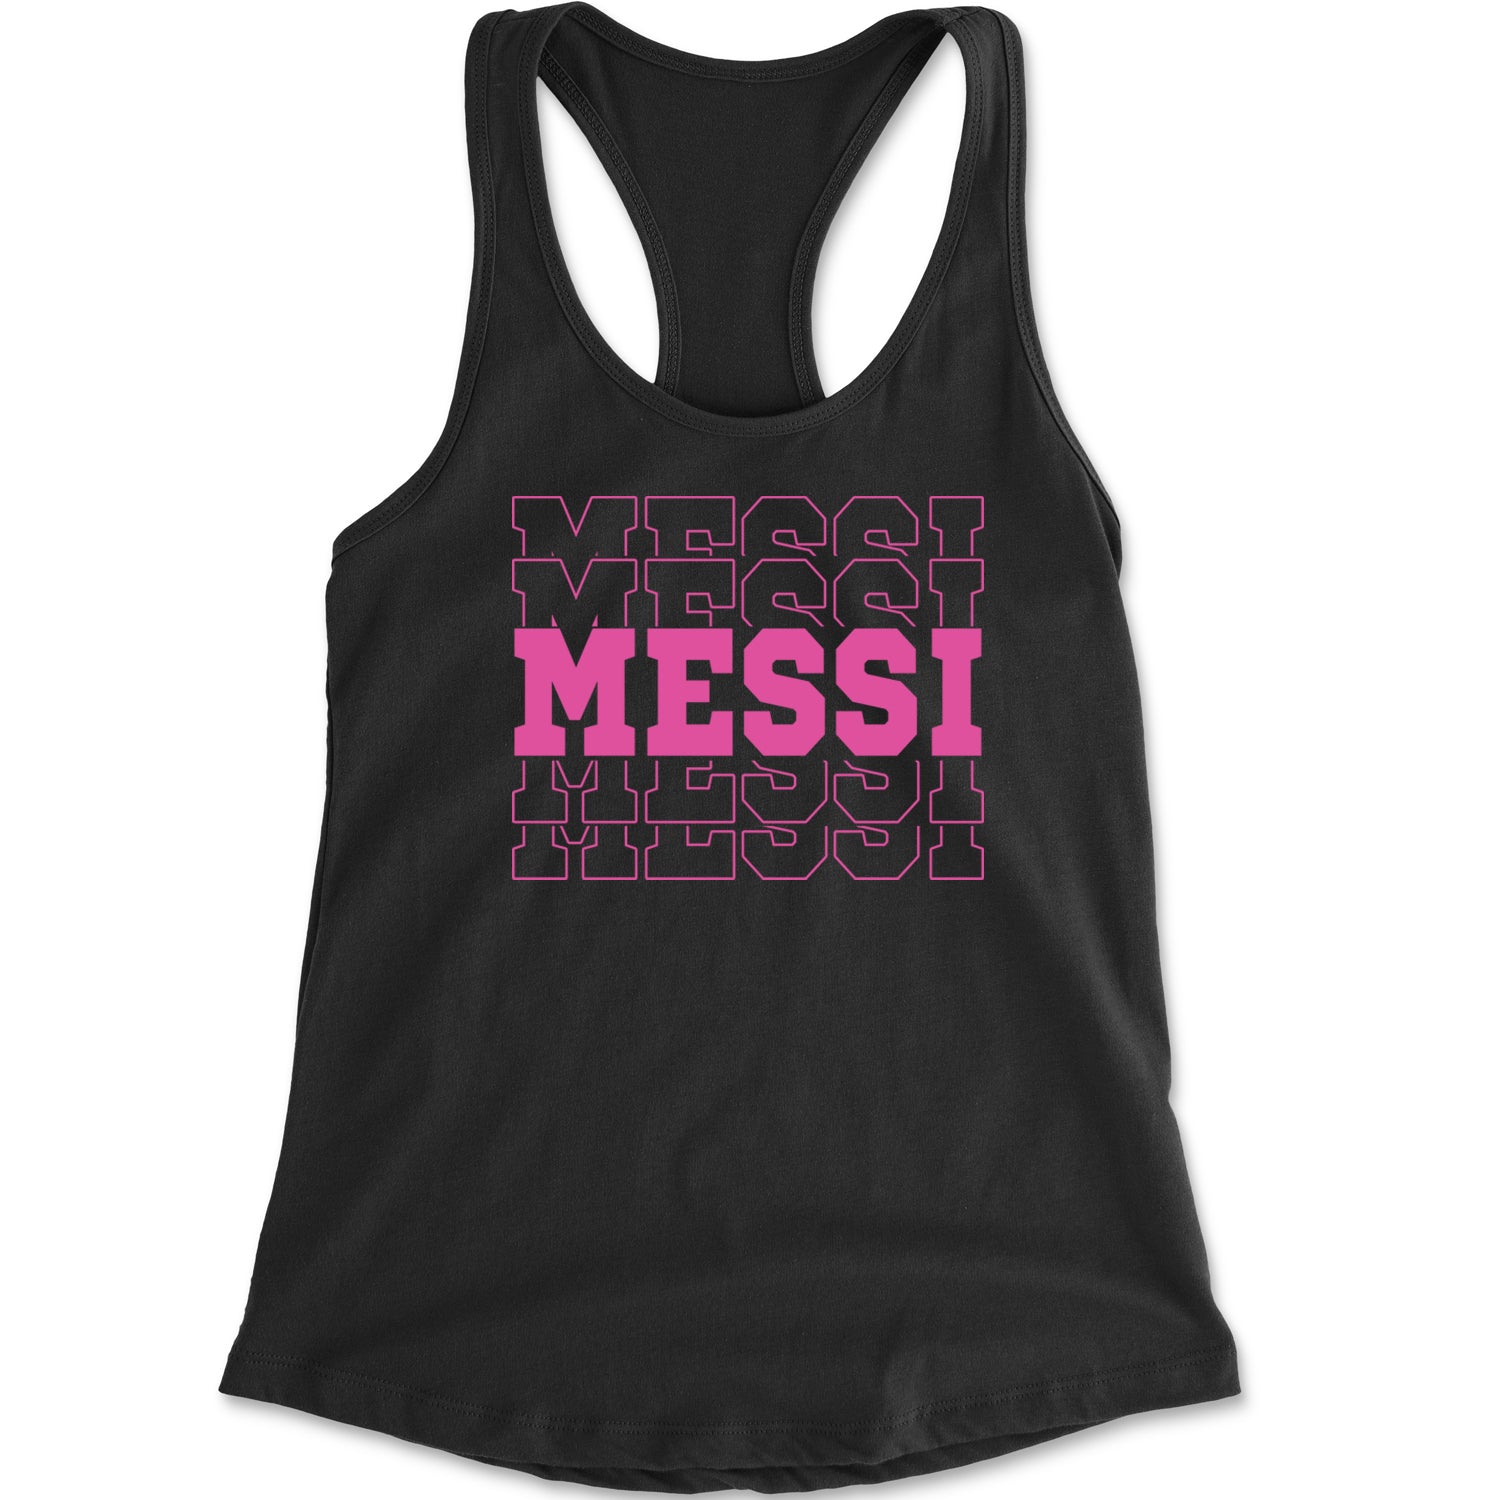 Messi Miami Futbol Racerback Tank Top for Women